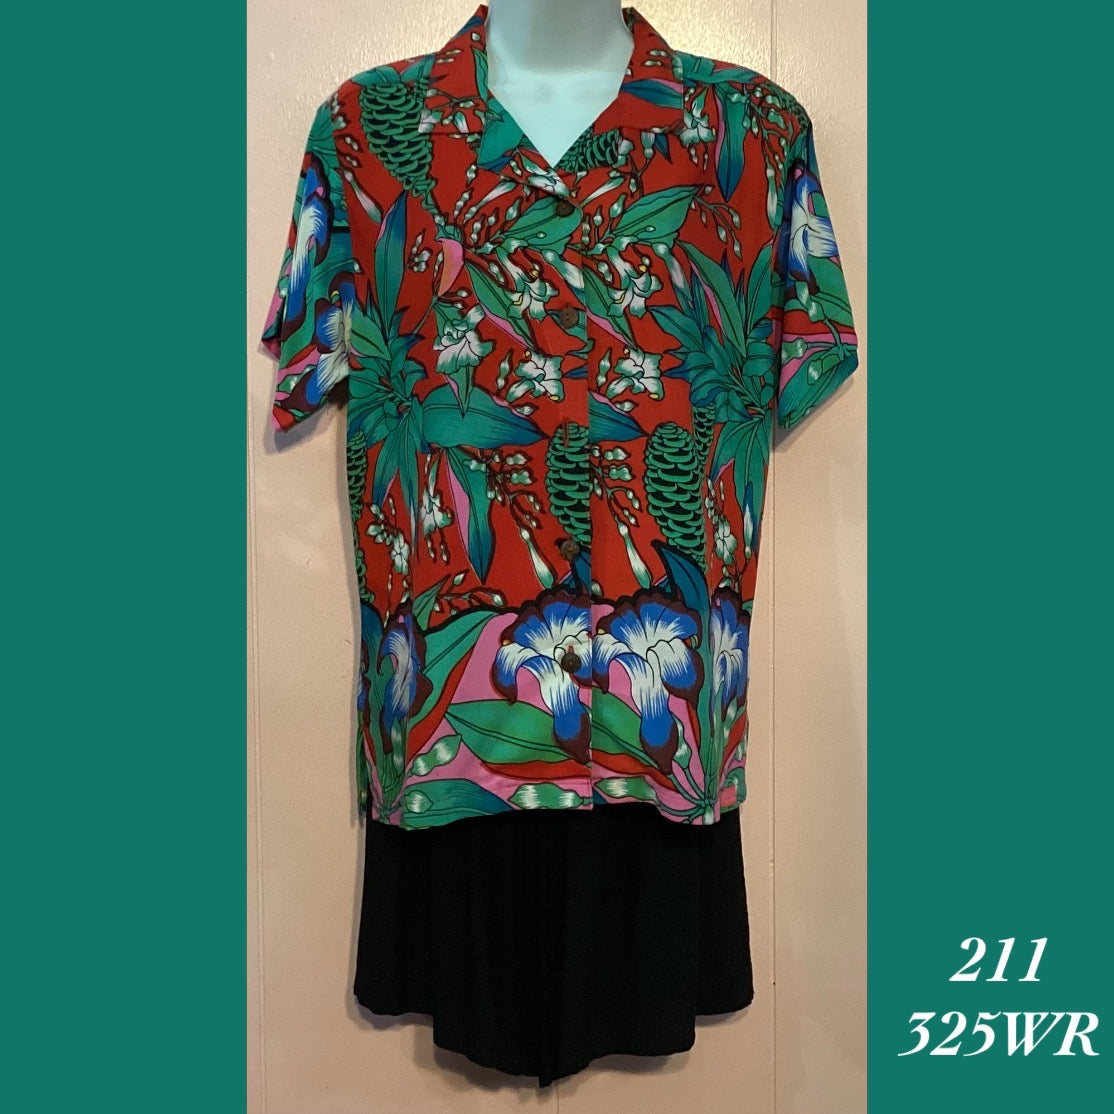 211 - 325WR , Women's Aloha shirt